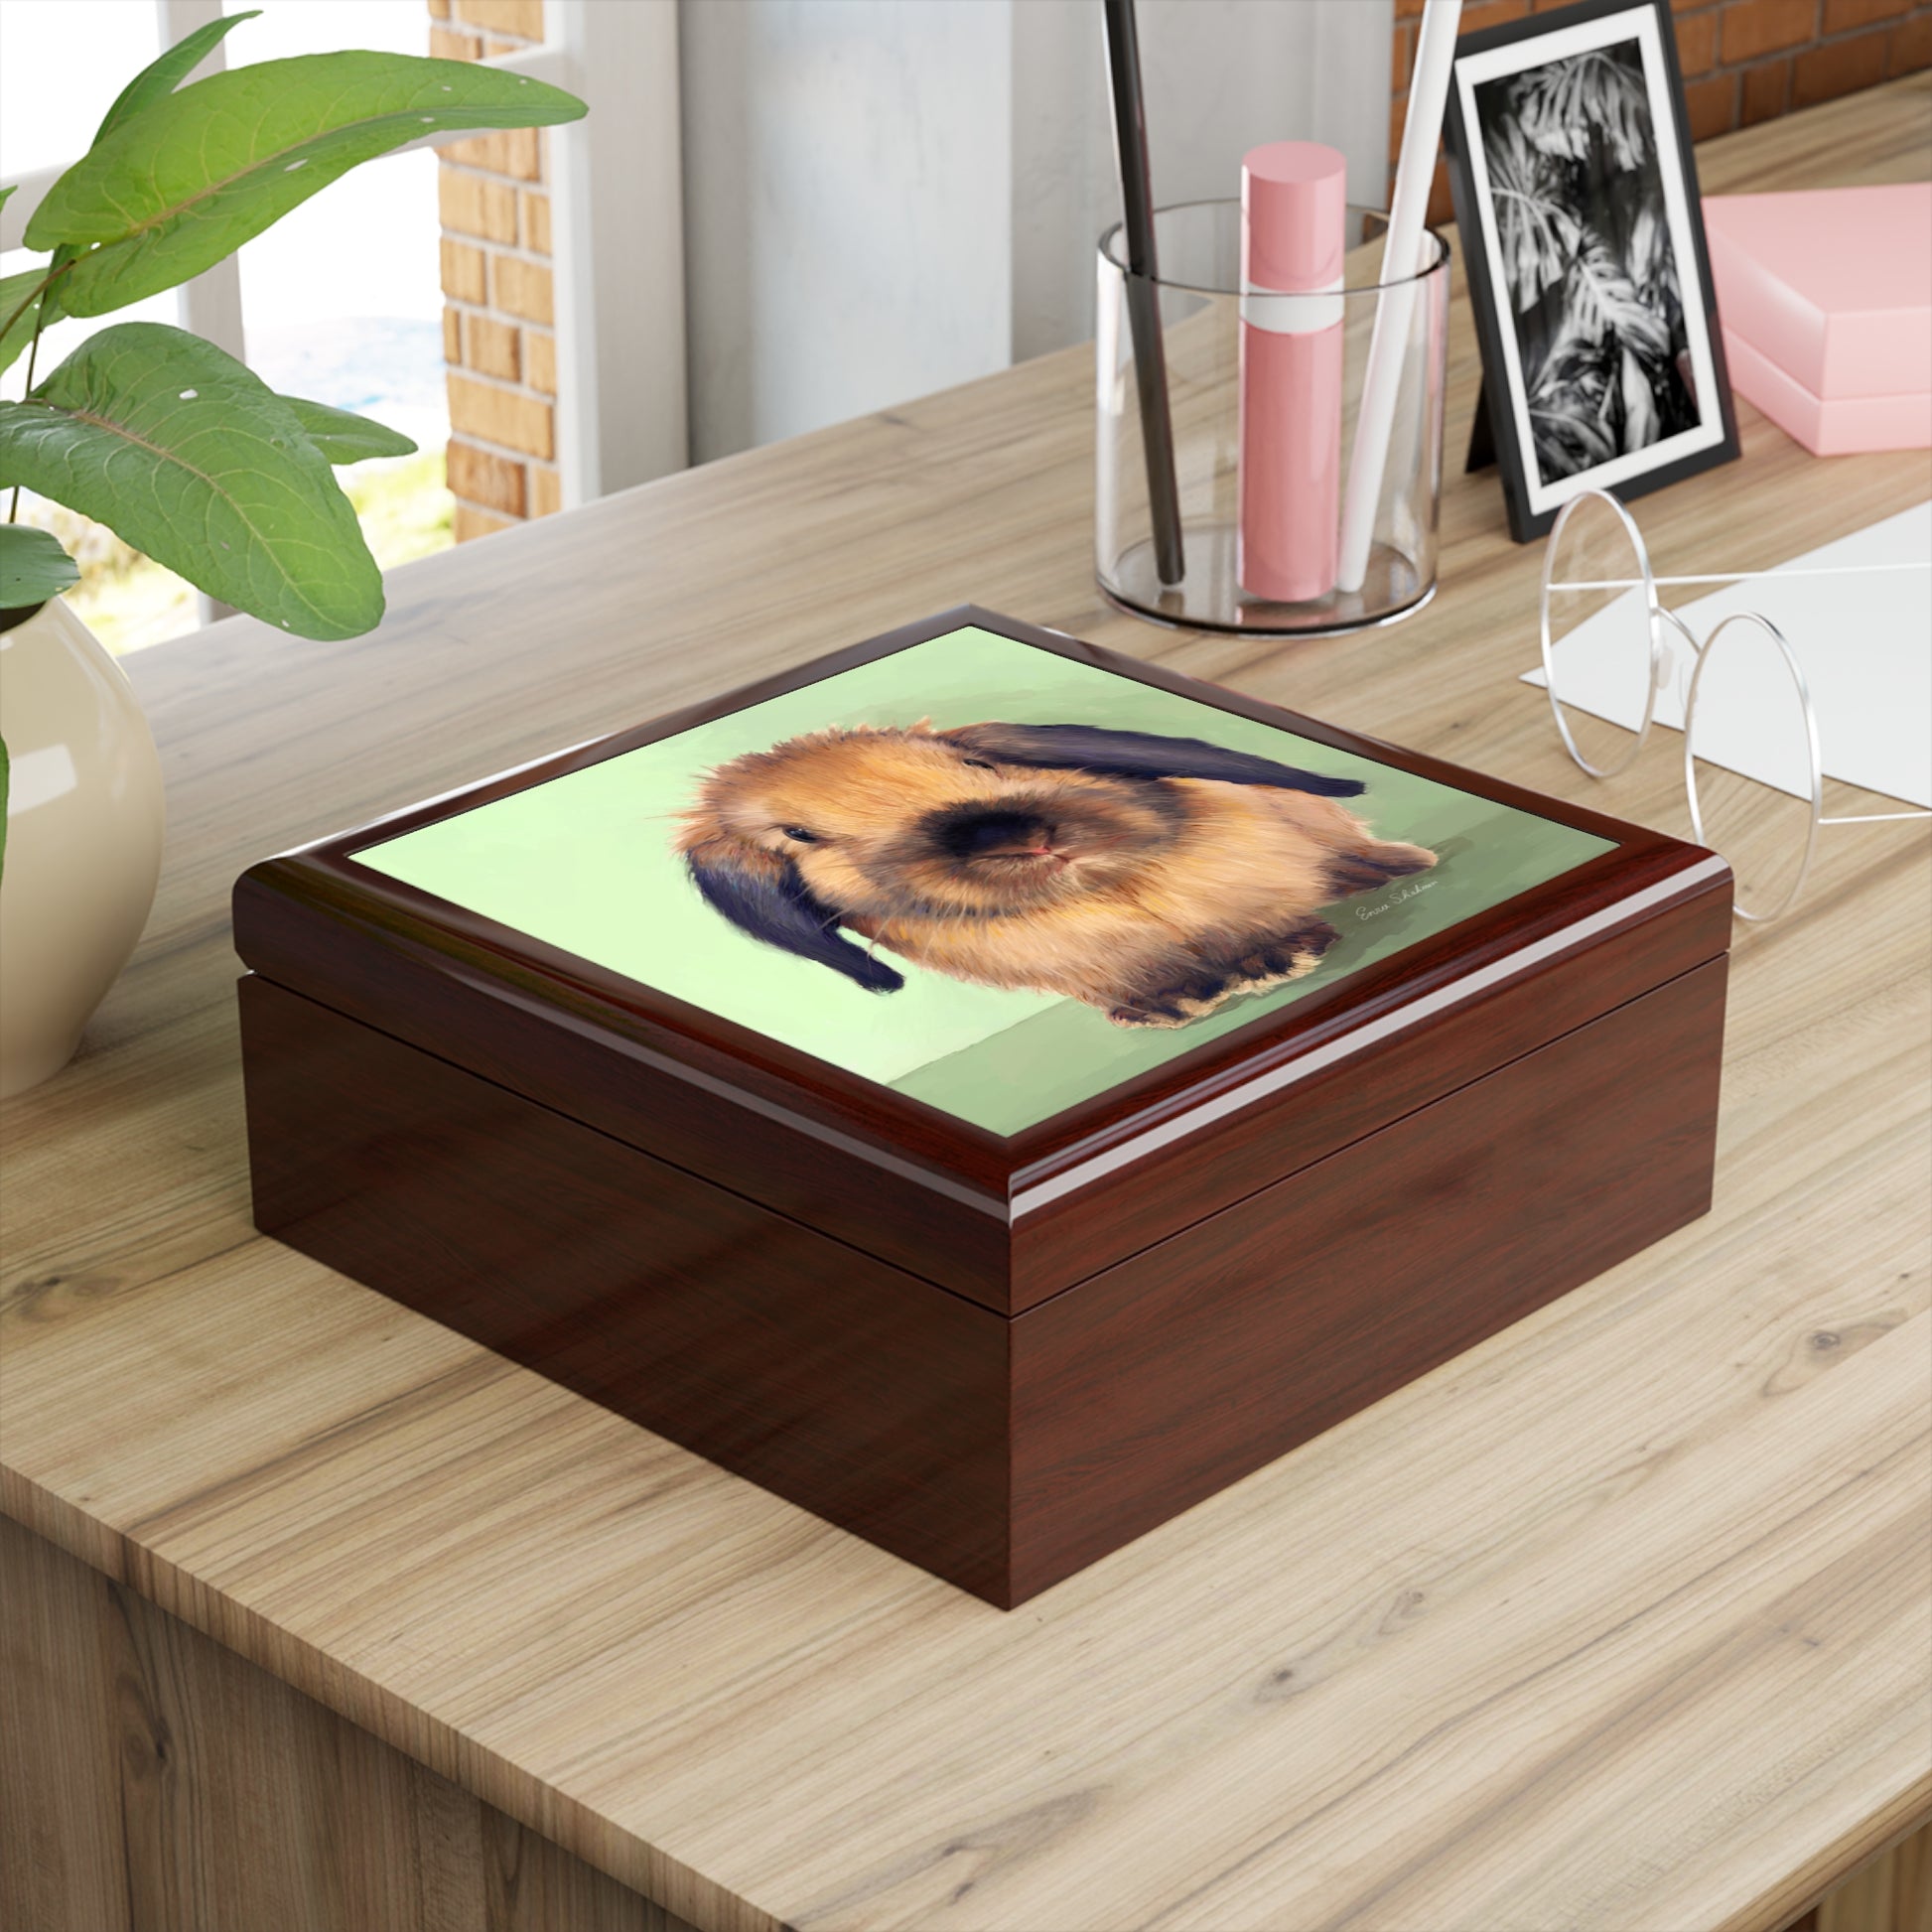 Jewelry / Keepsake Box - Holland Lop Rabbit - Lacquered Box mahogany